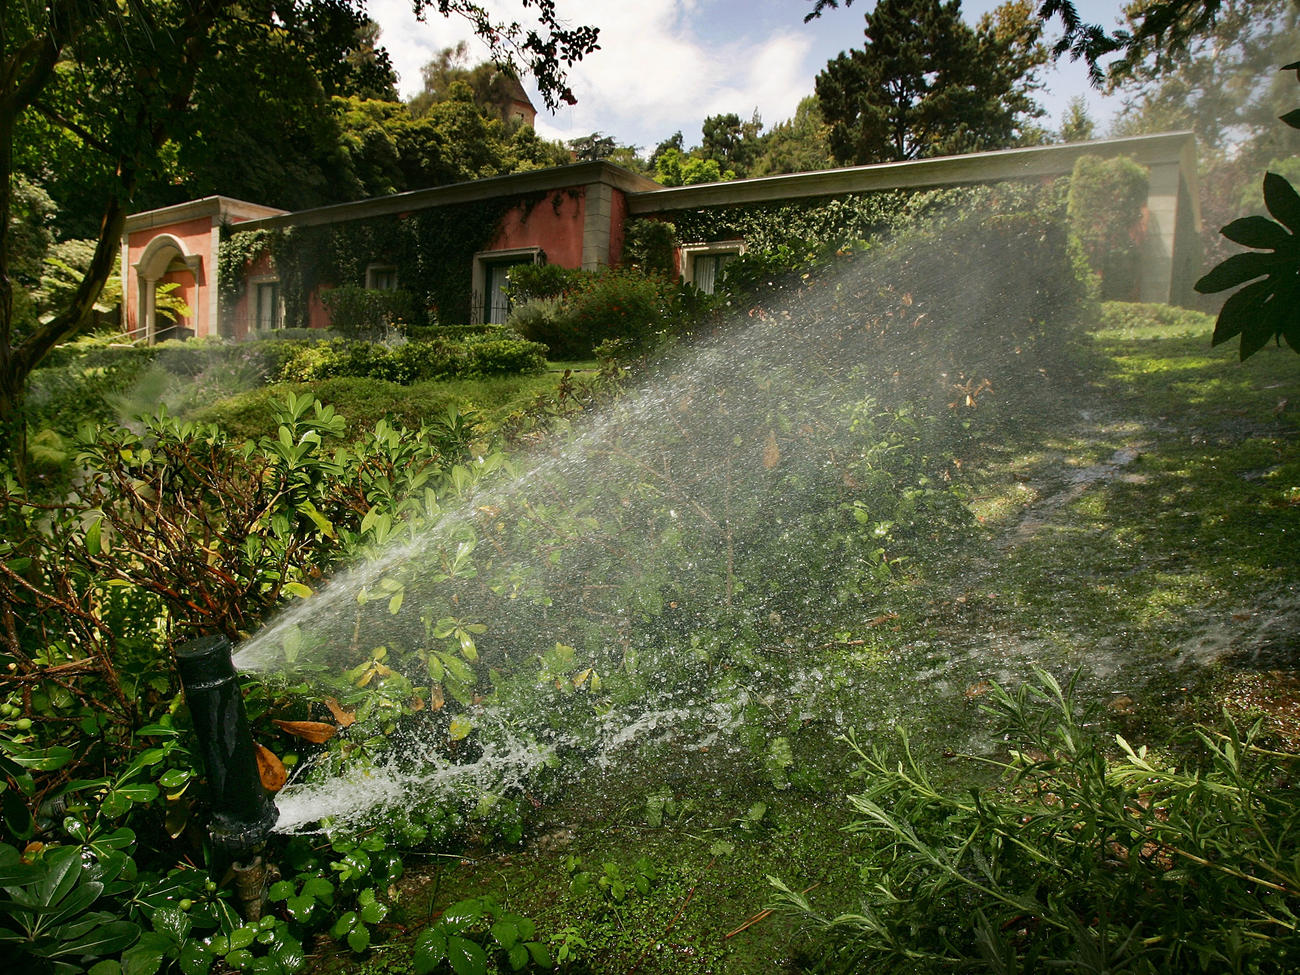 In Bel-Air, one homeowner is using enough water to sustain 90 households